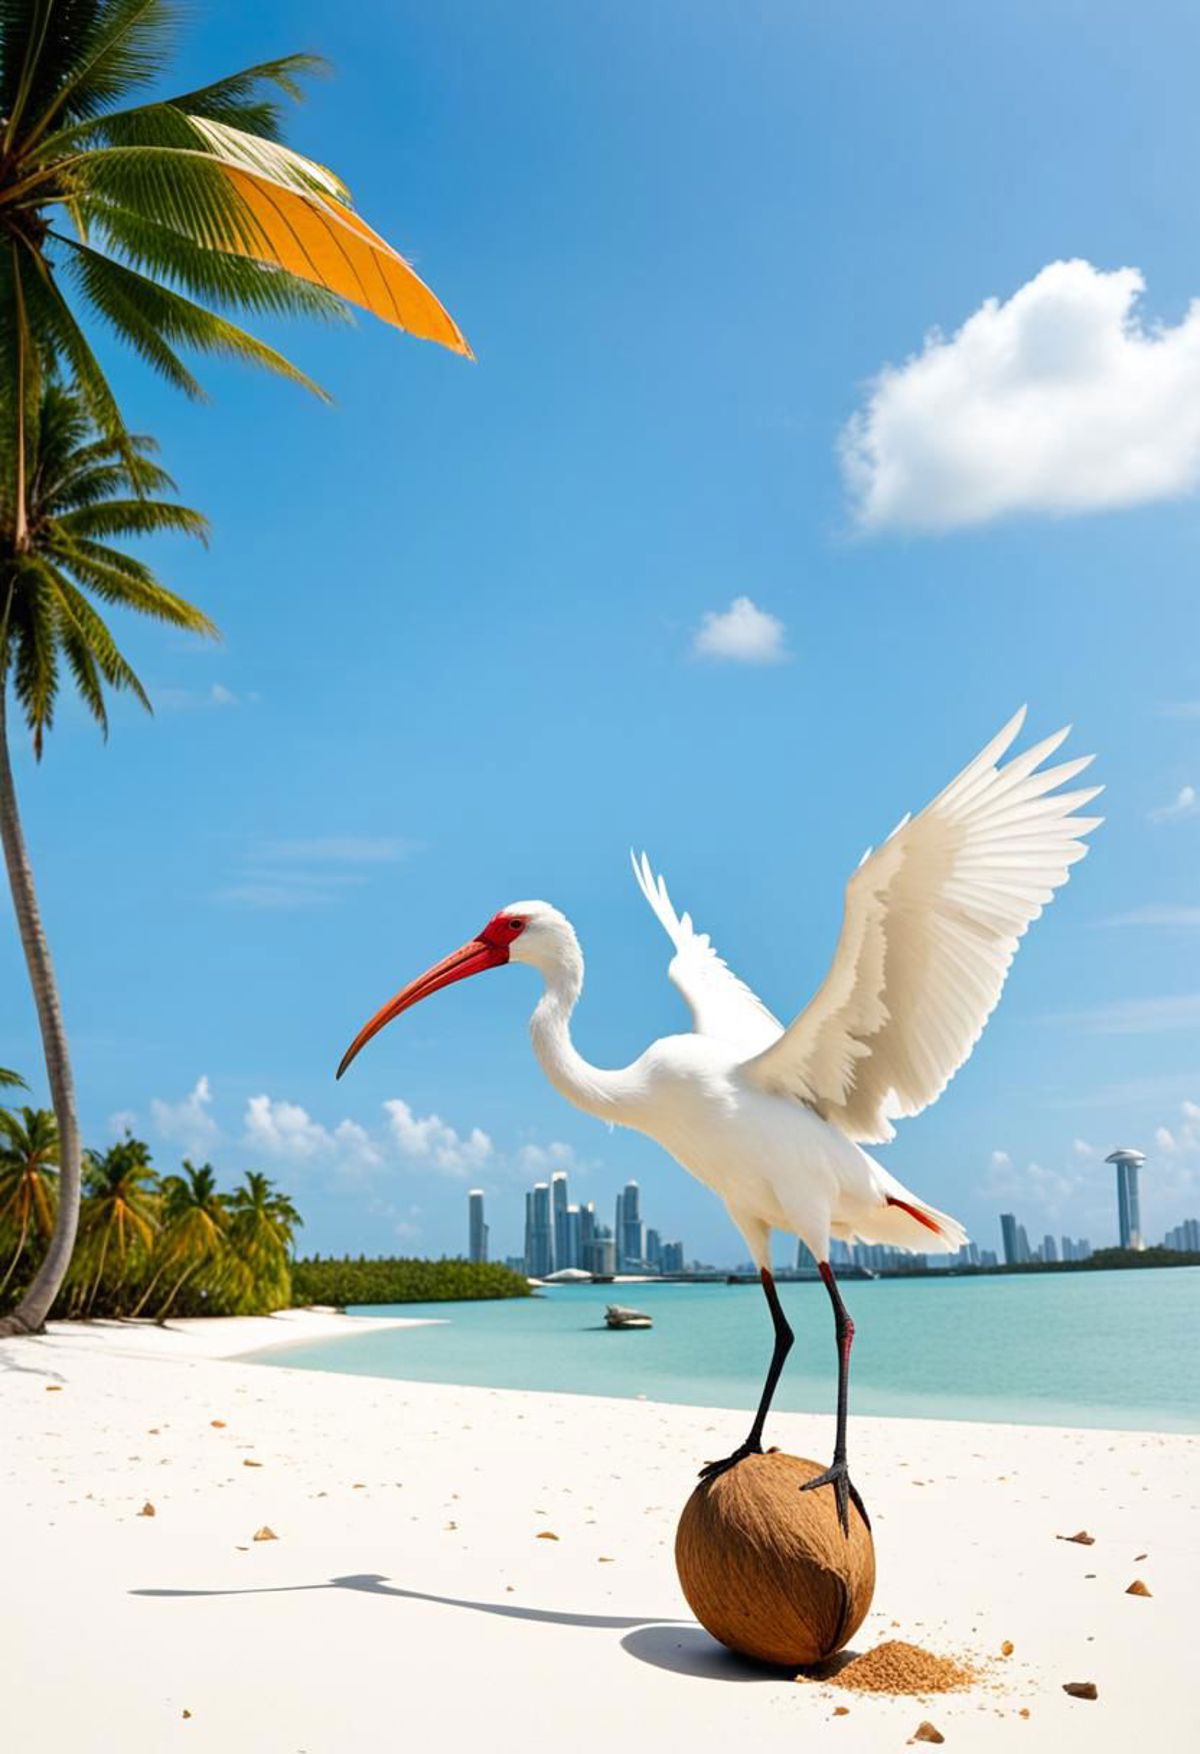 White Bird with Red Beak Standing on Sandy Beach by City Skyline